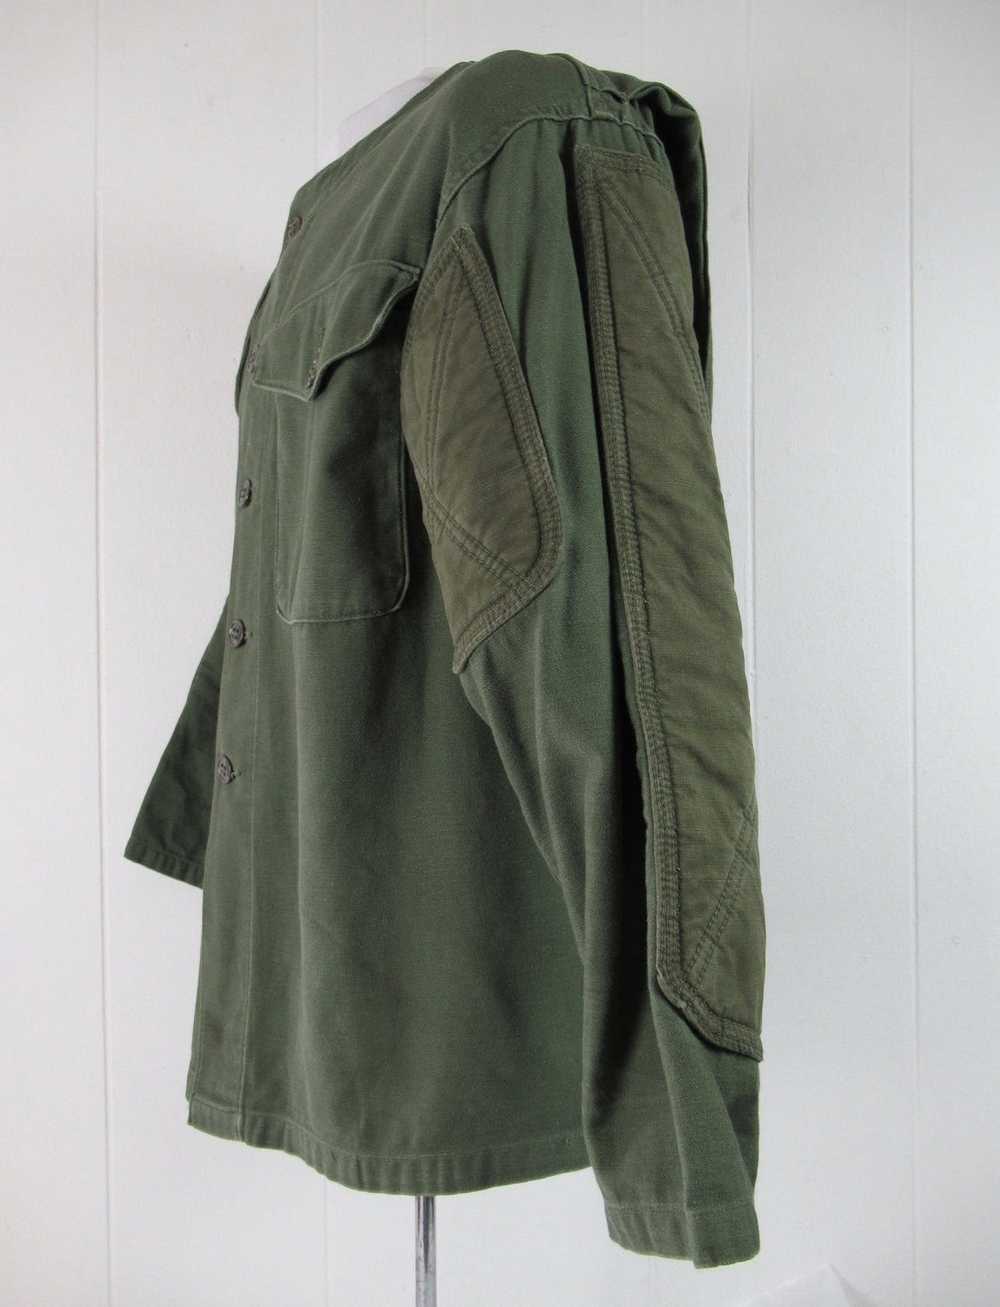 Military 1969 USMC shooting jacket - image 2